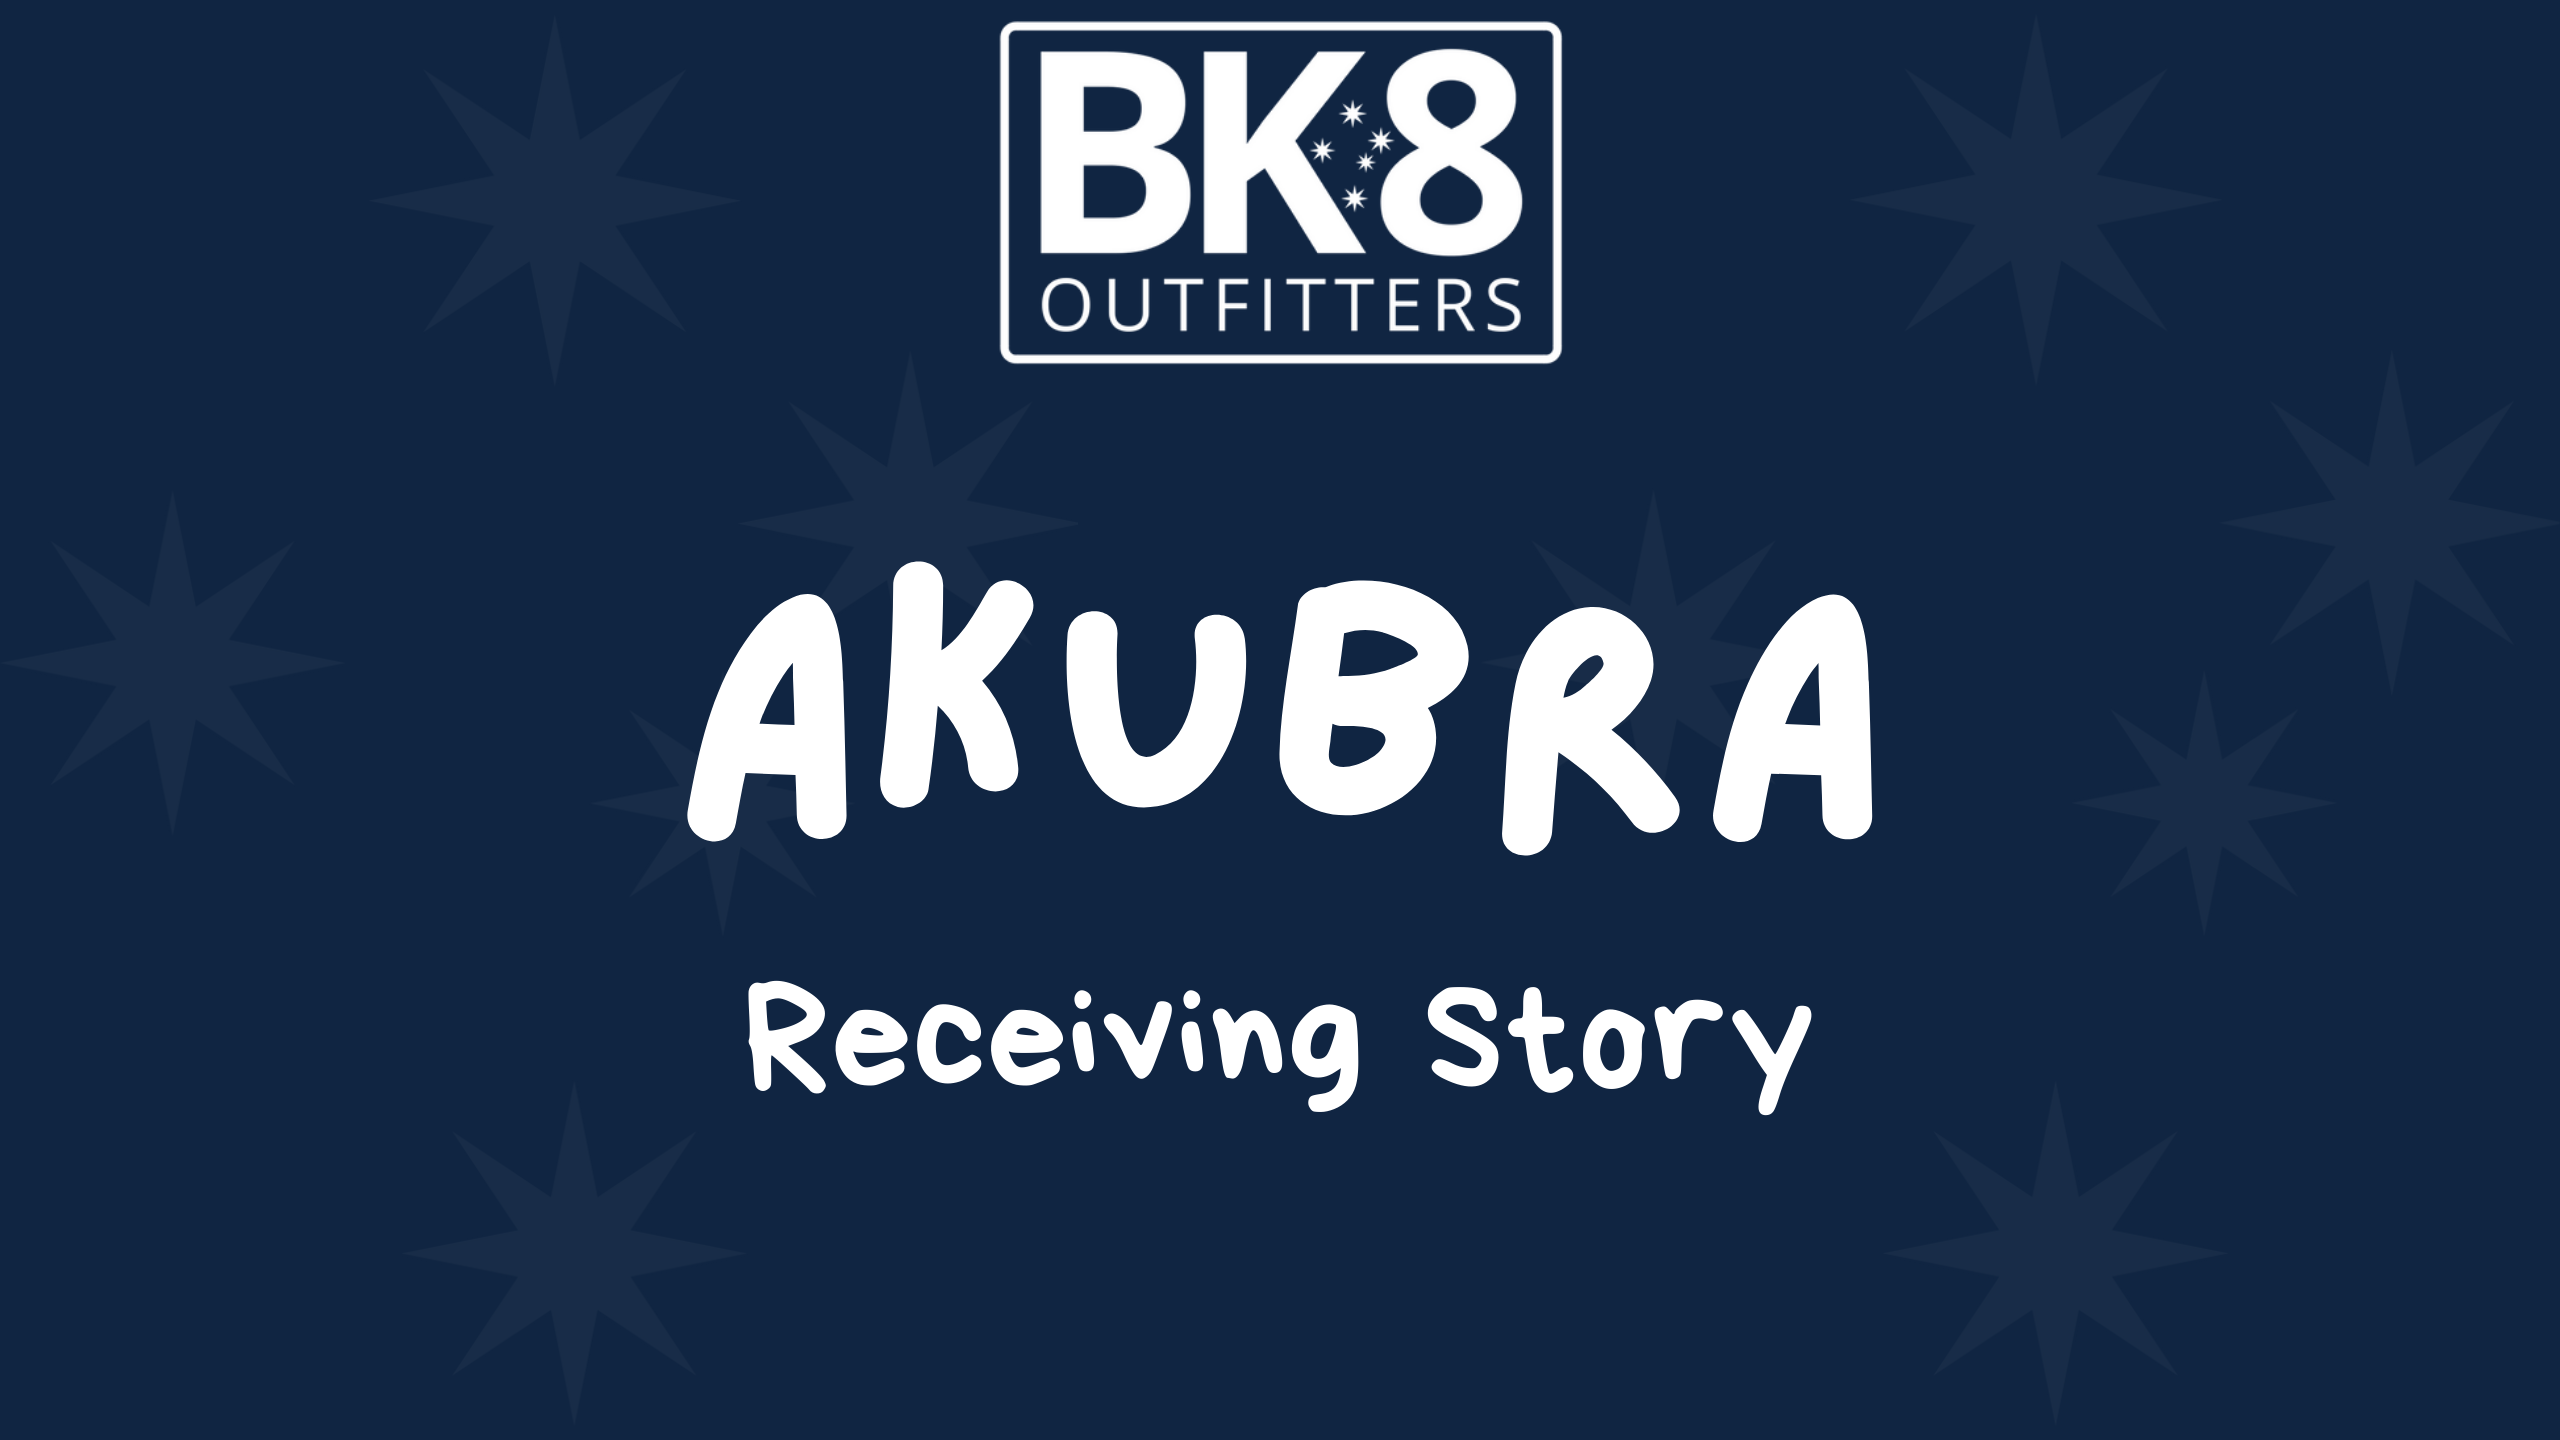 Akubra | Your Receiving Story